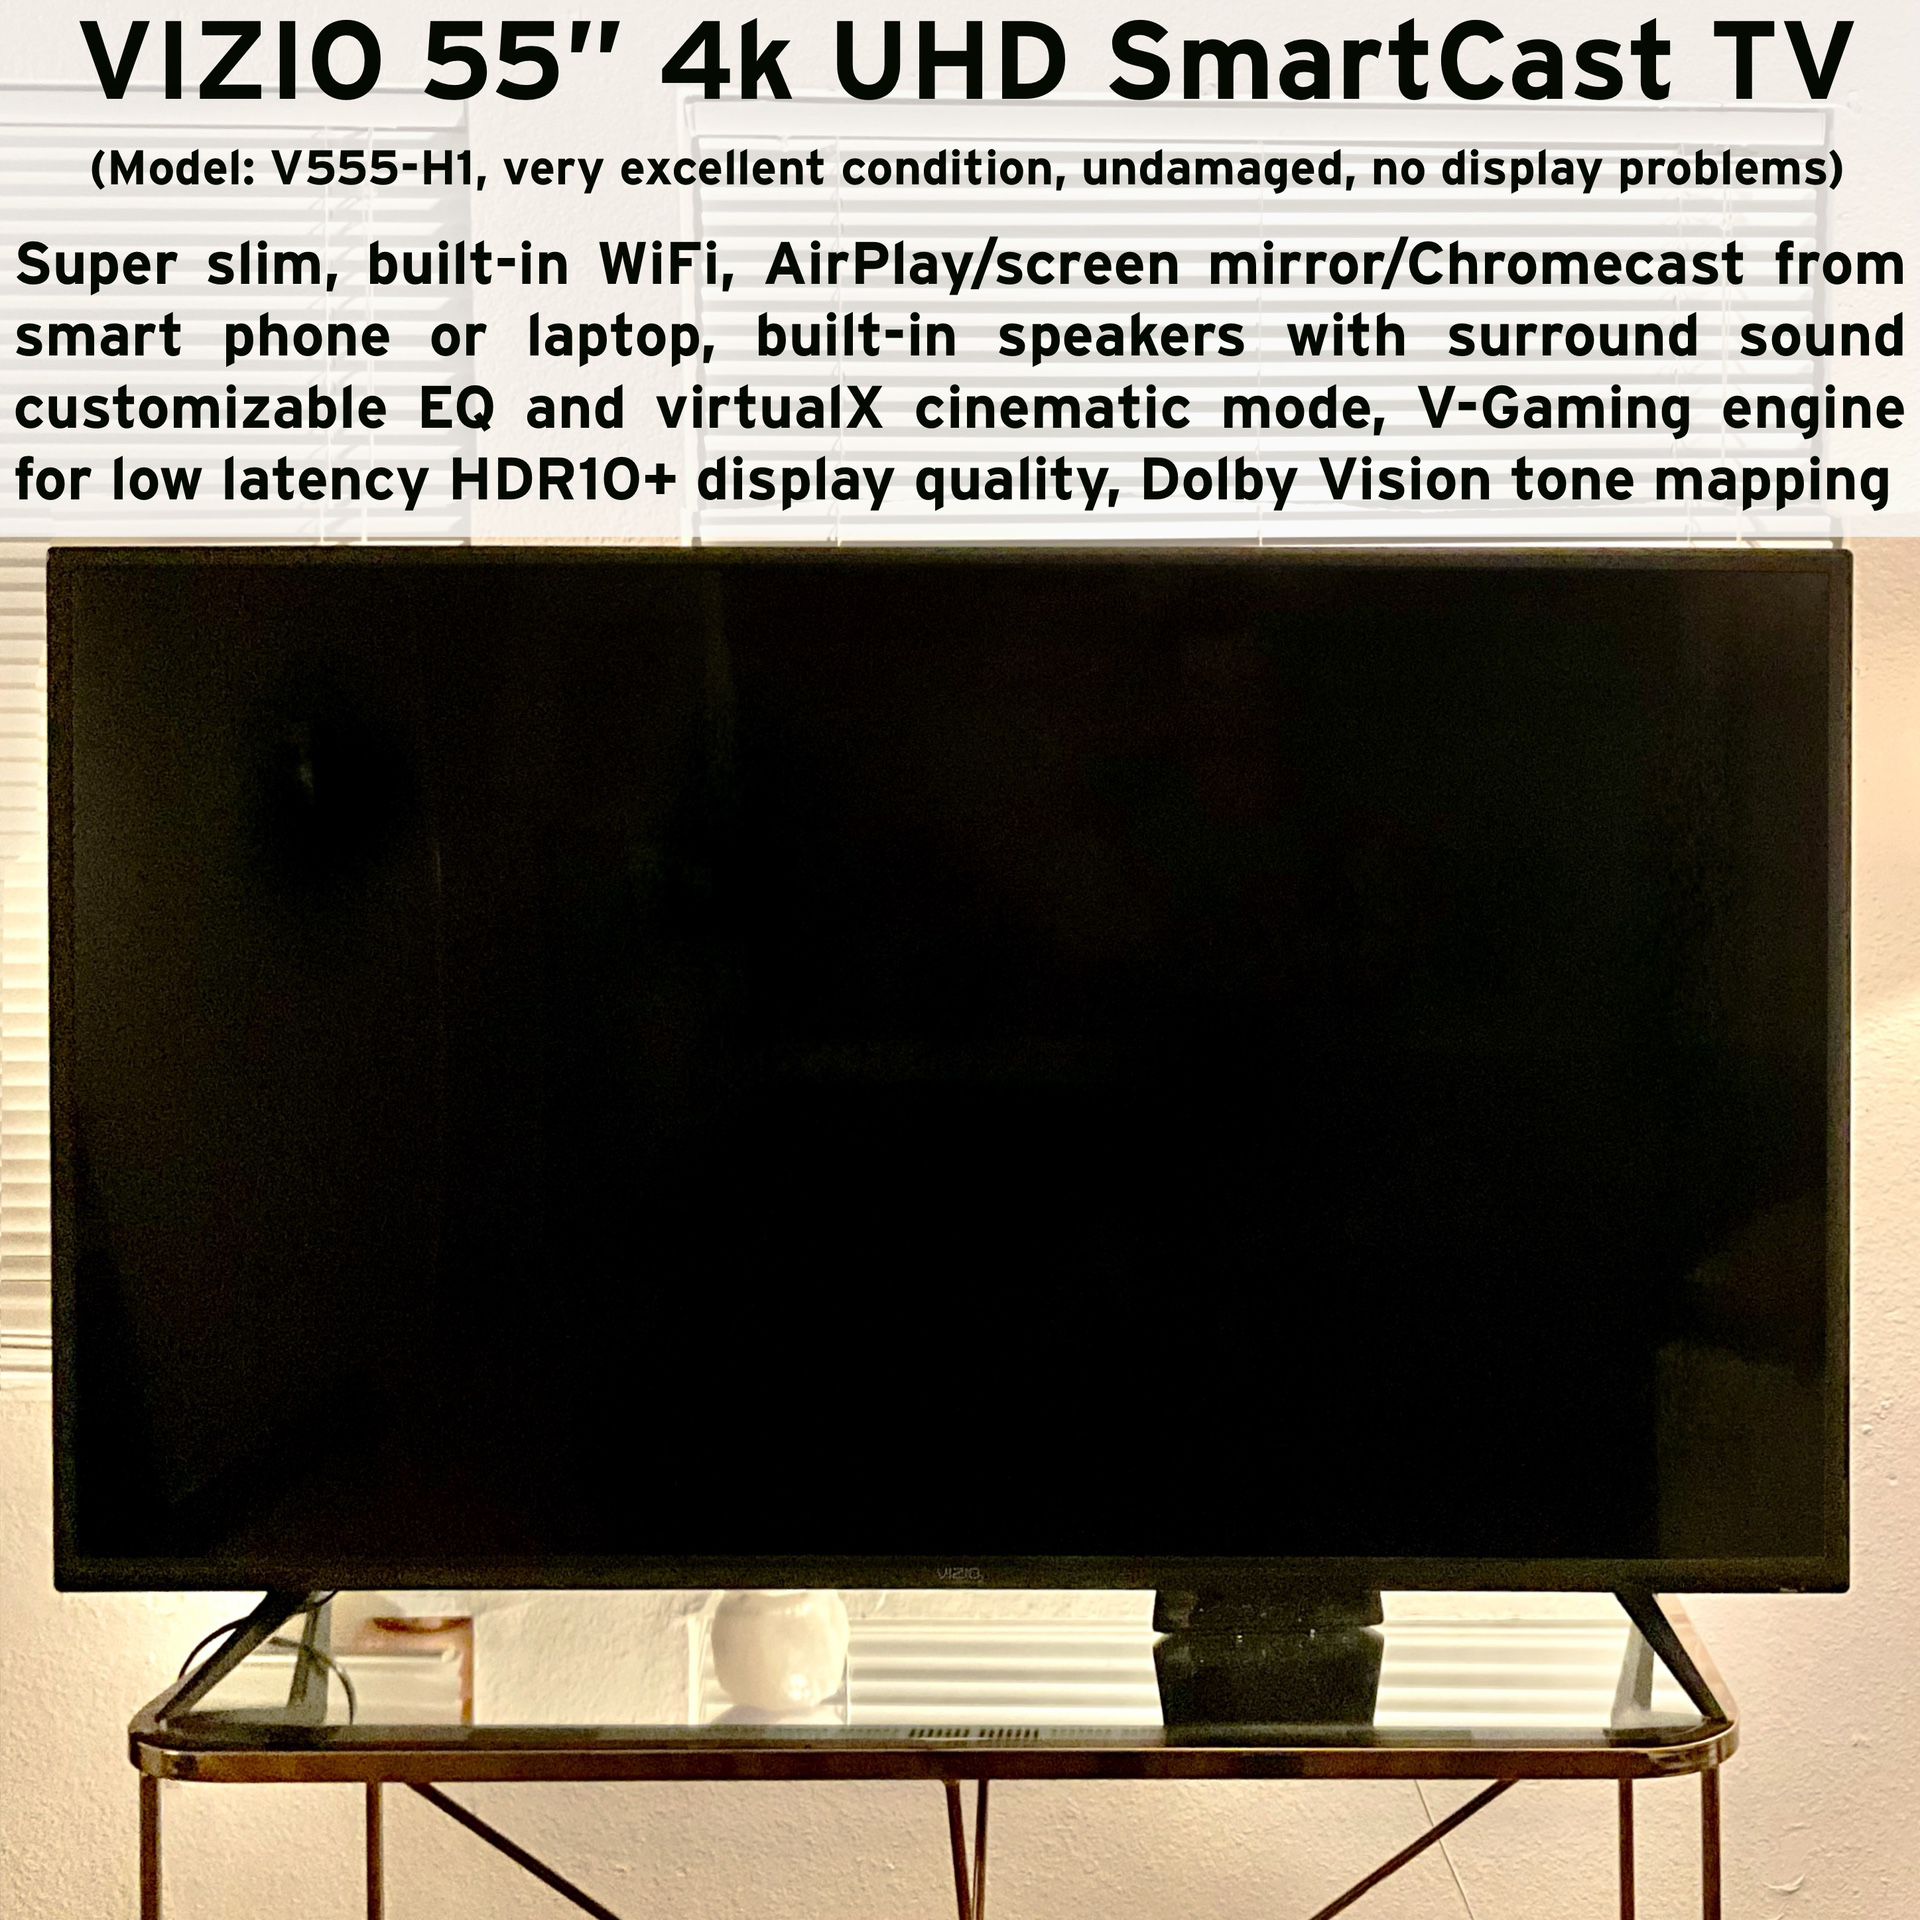 Vizio V555-H1 55” 4k UHD SmartCast TV (excellent condition)